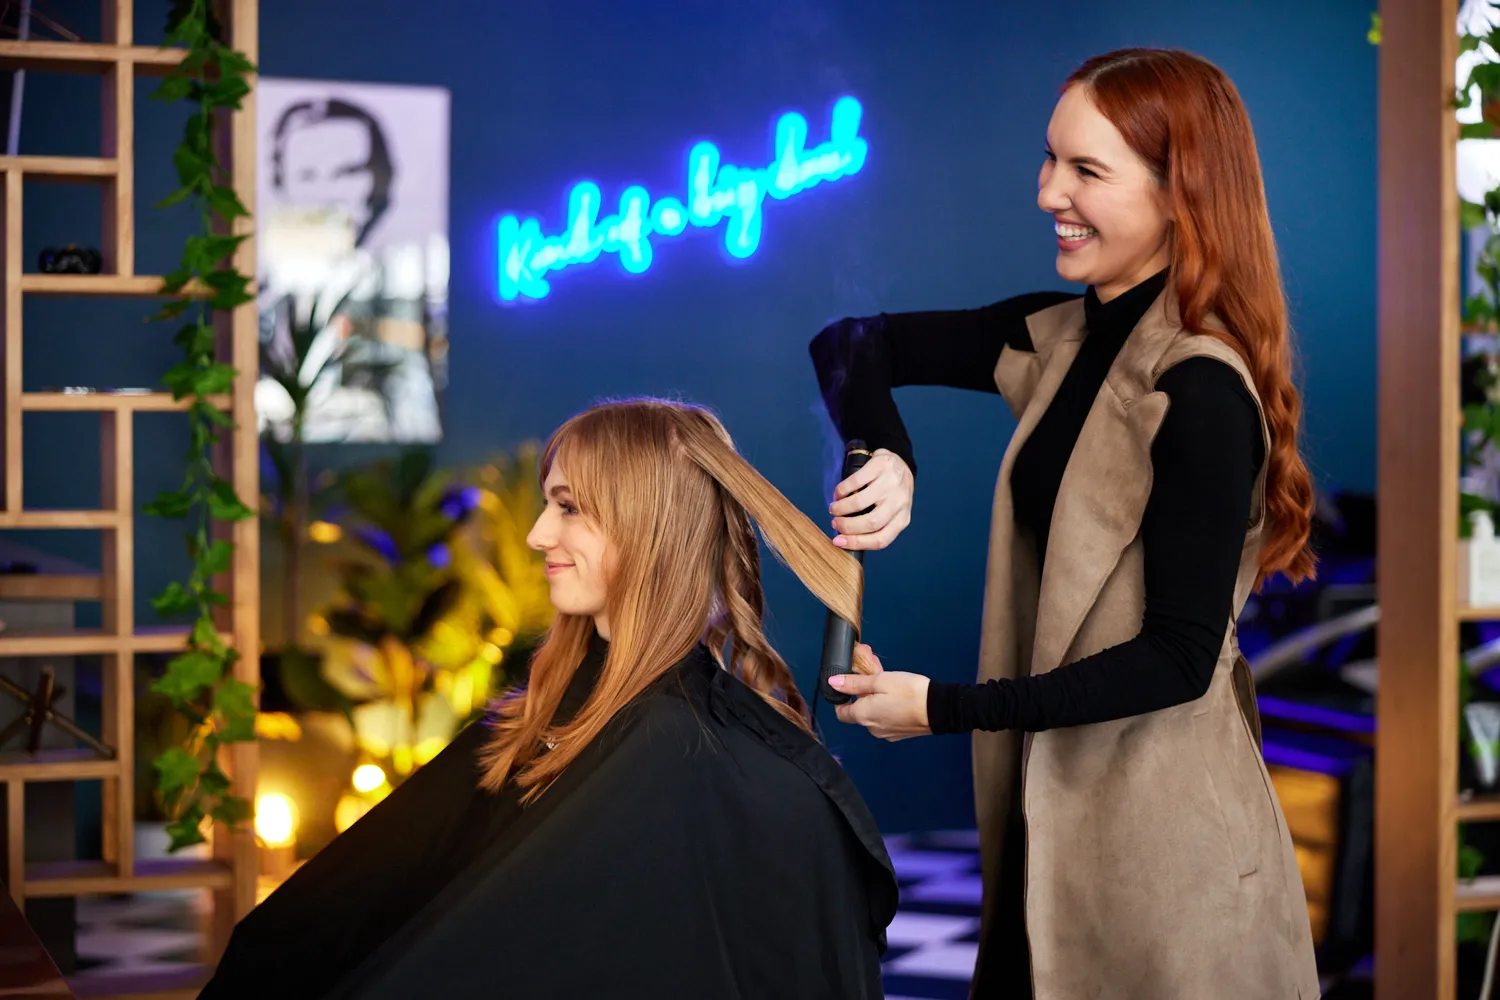 A hair stylist styling a client’s hair in a hair salon